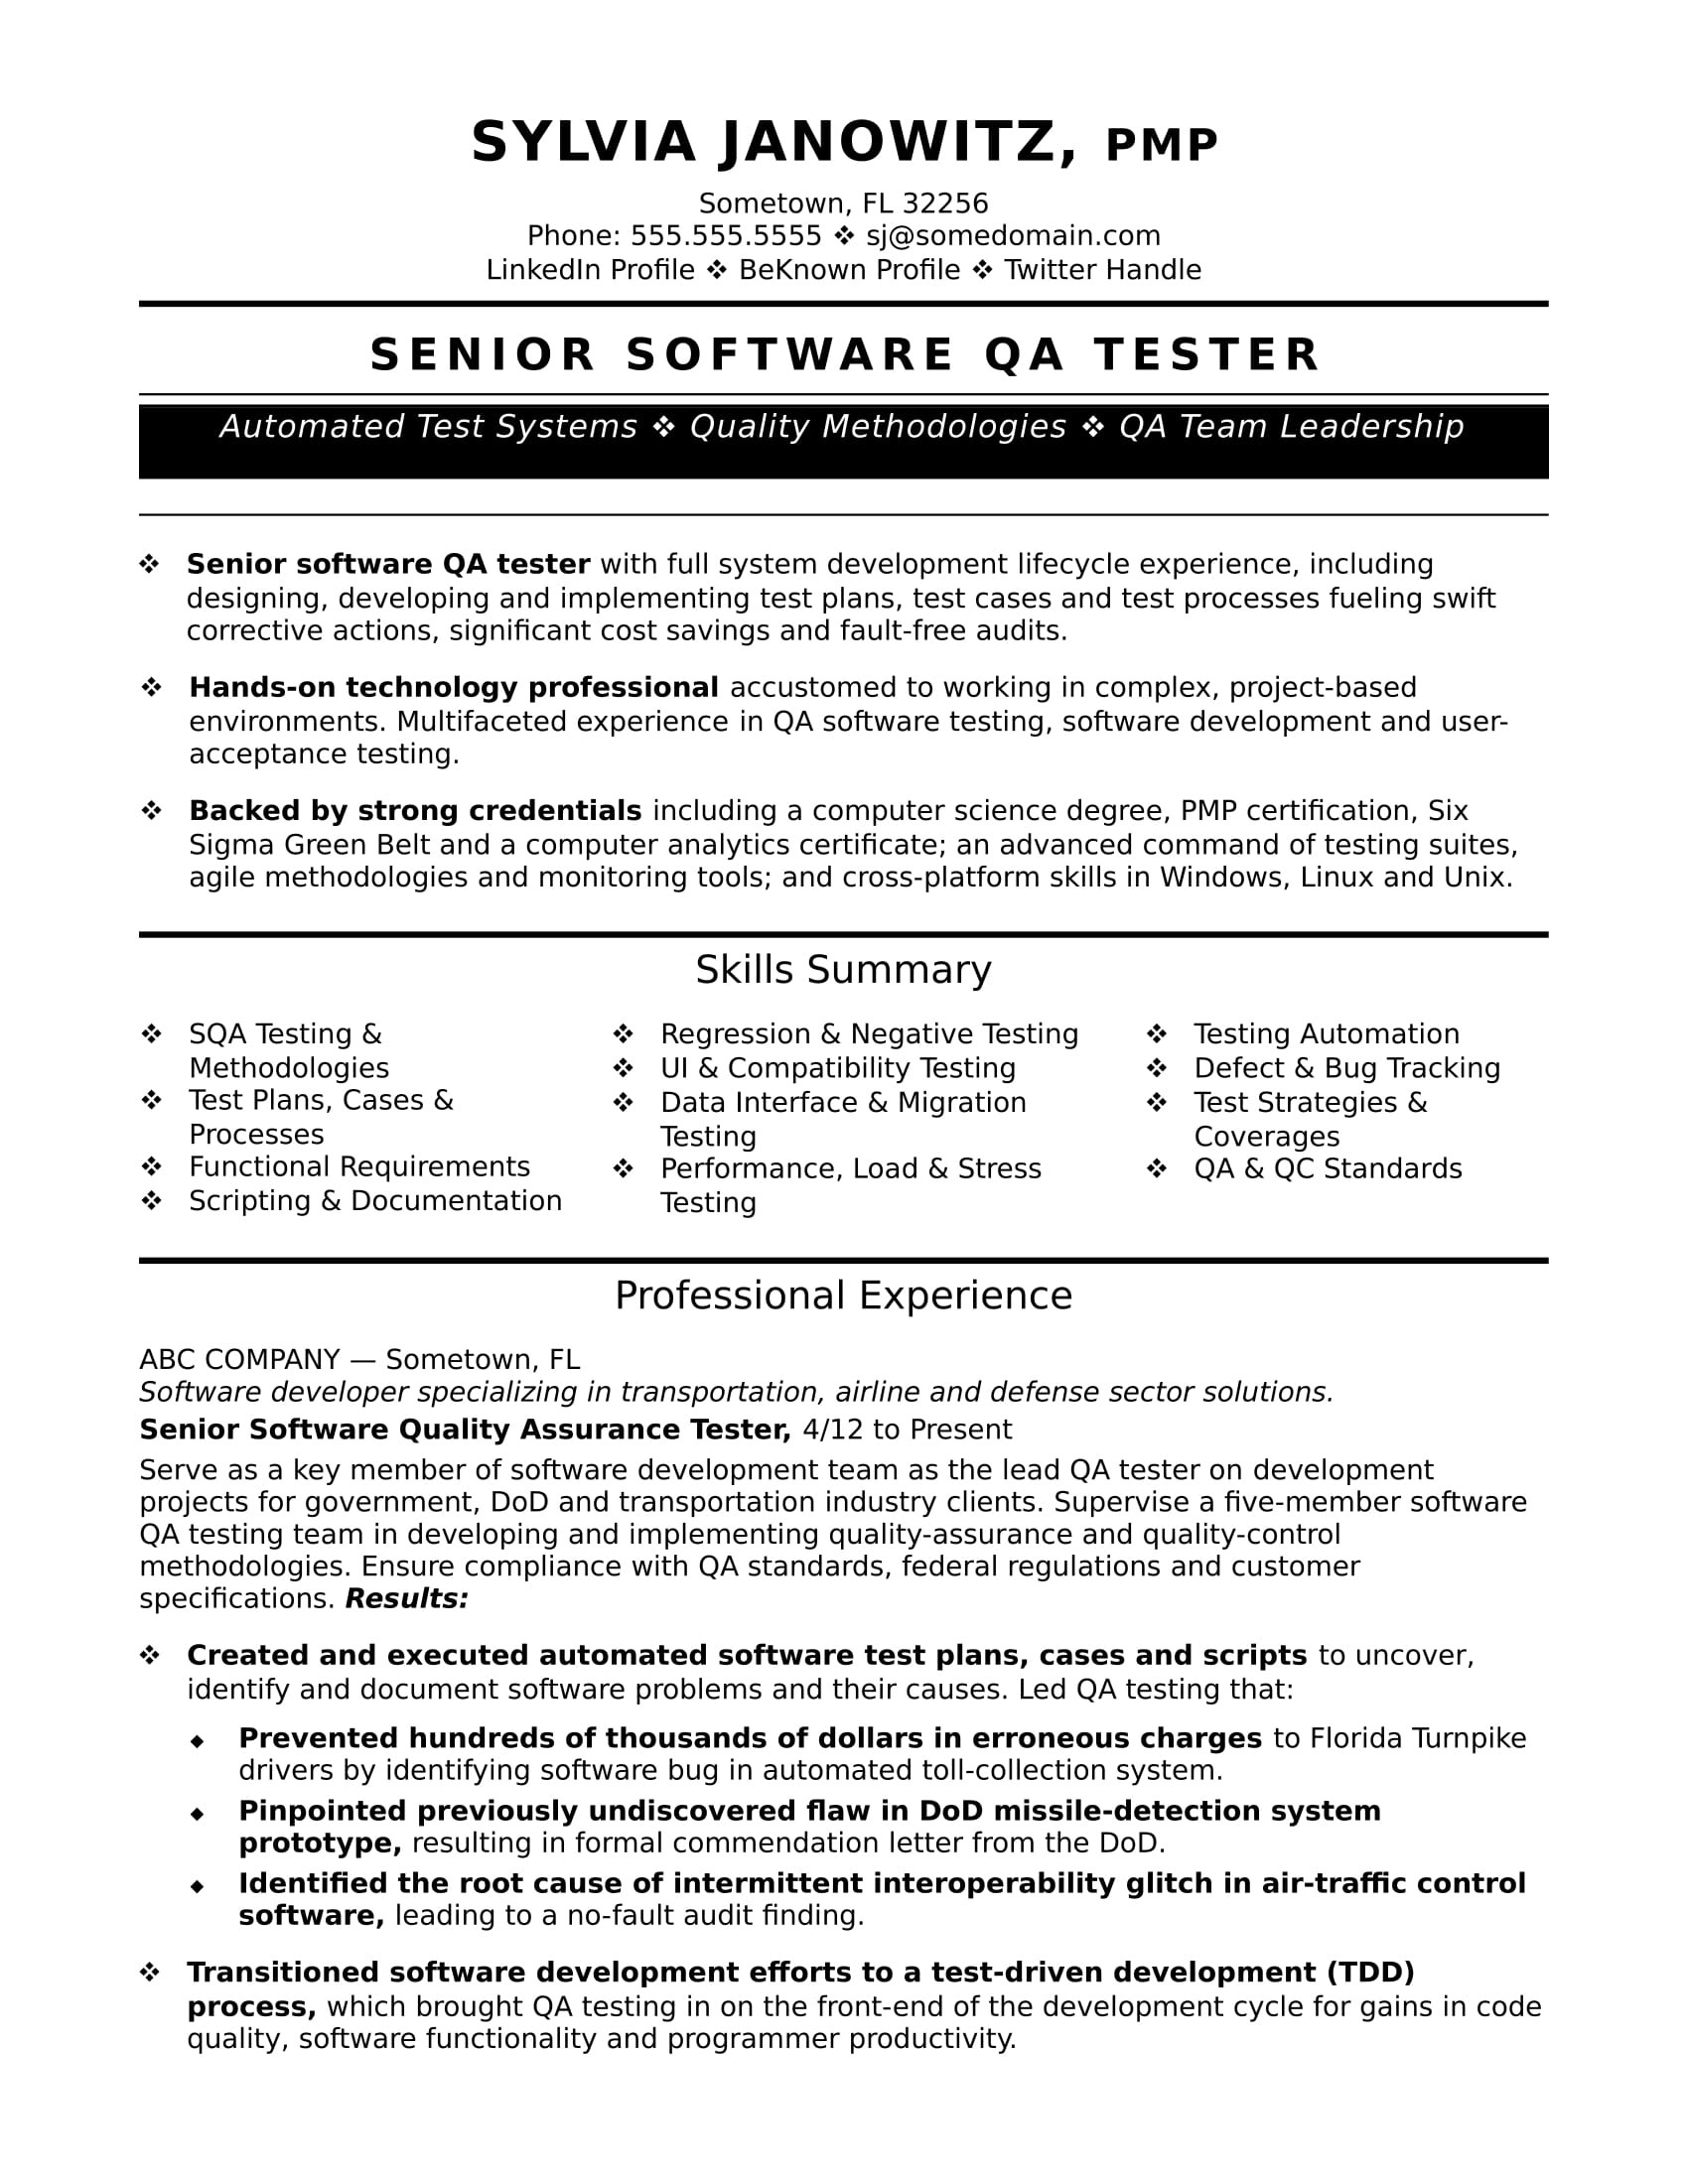 Software Testing Resume Samples for 3 Years Experience Experienced Qa software Tester Resume Sample Monster.com